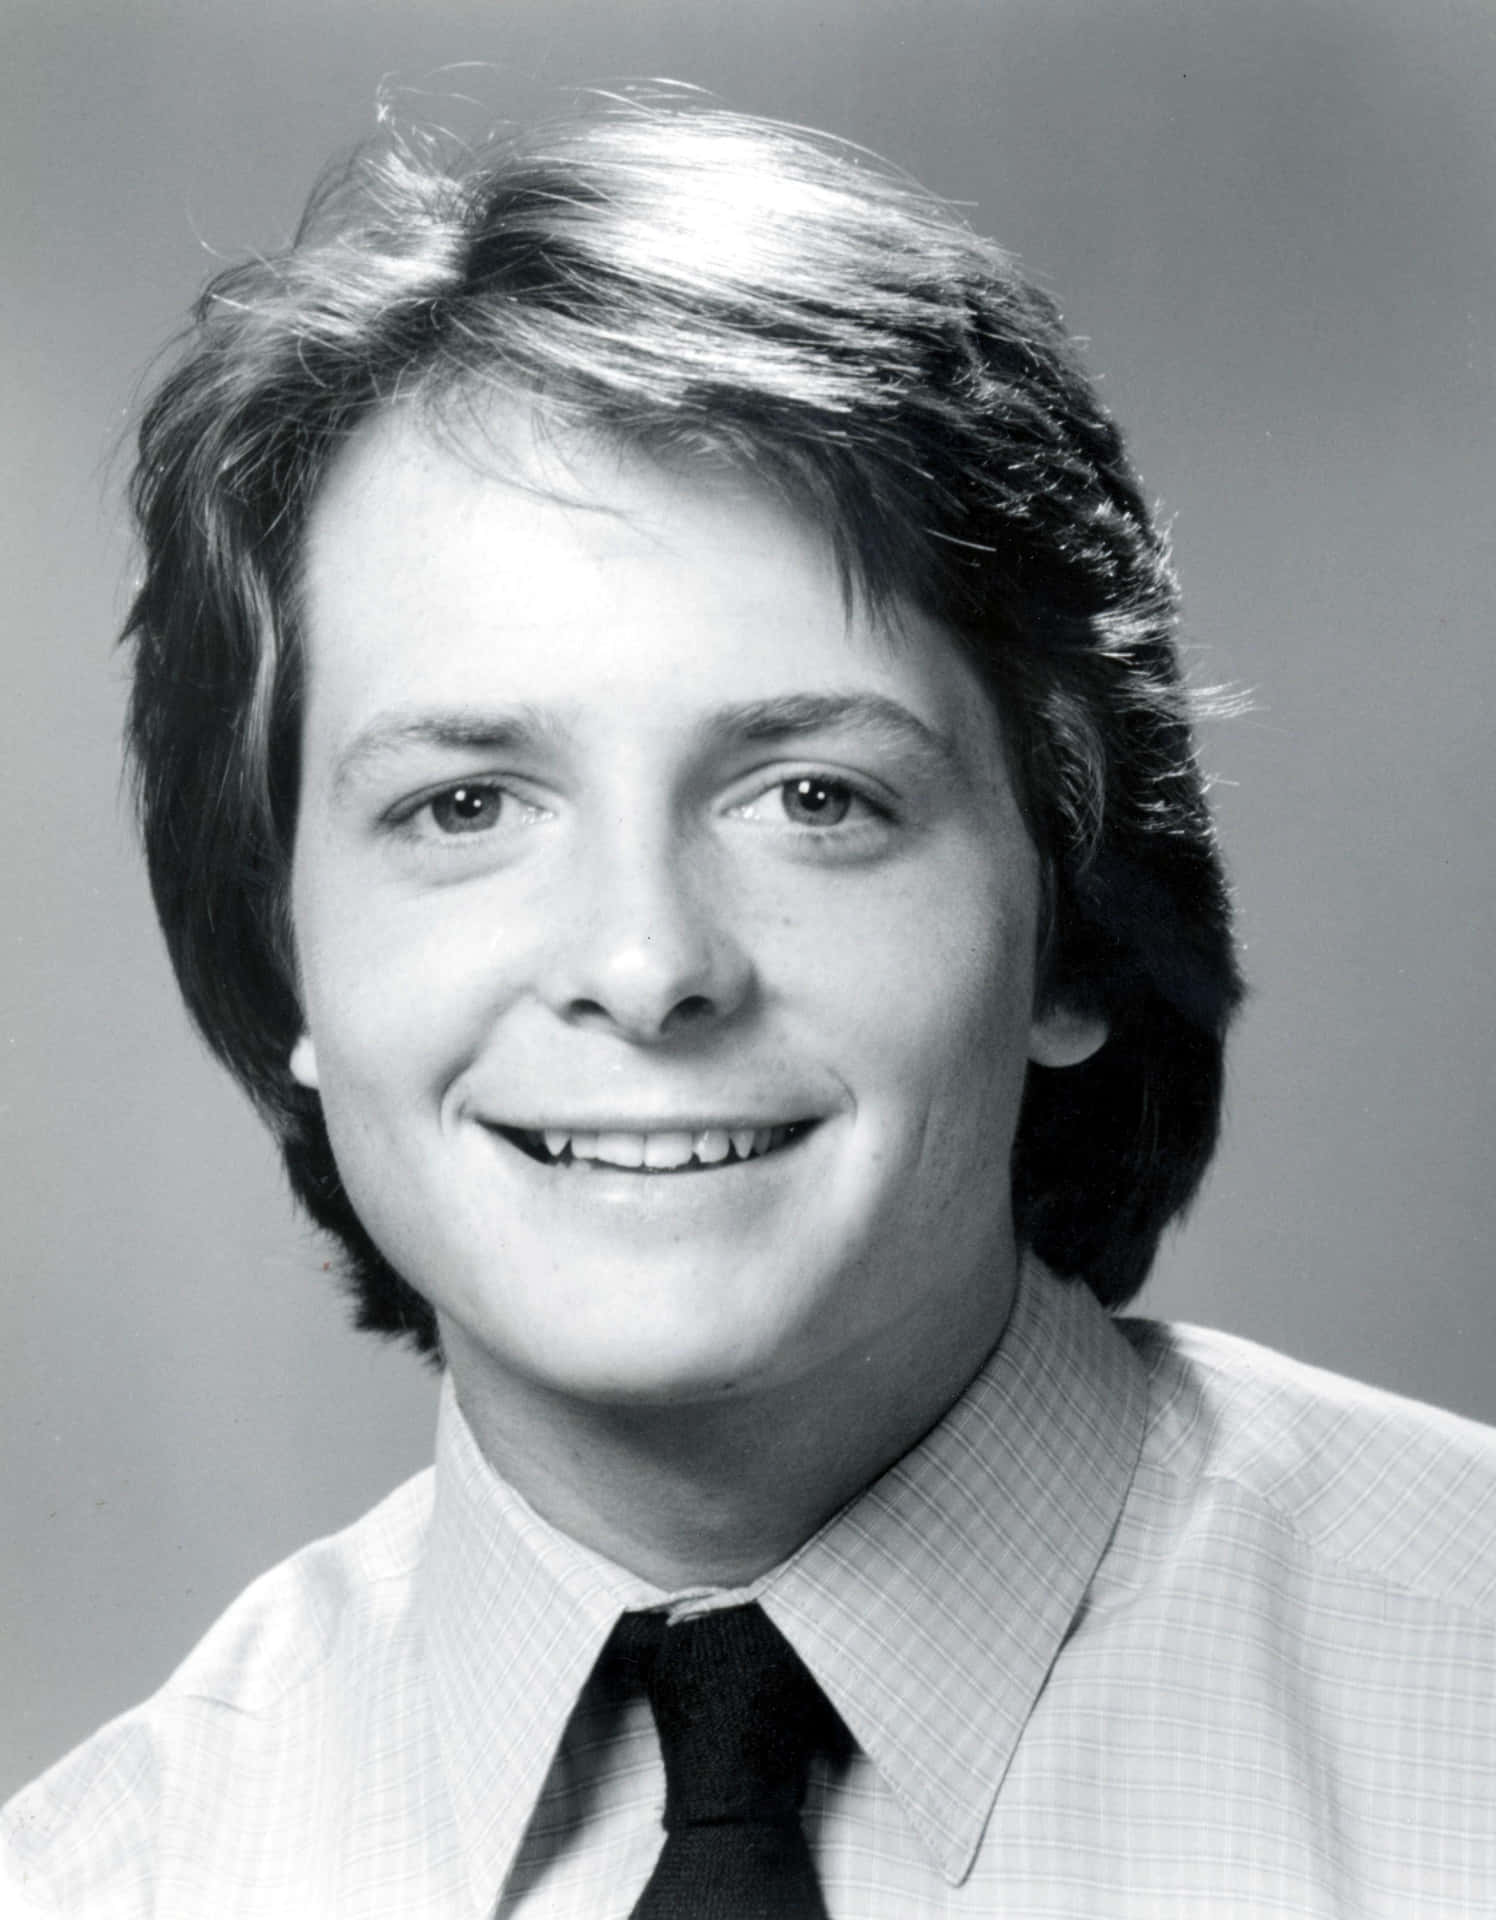 Michael J Fox, Legendary Actor And Parkinson's Disease Advocate.